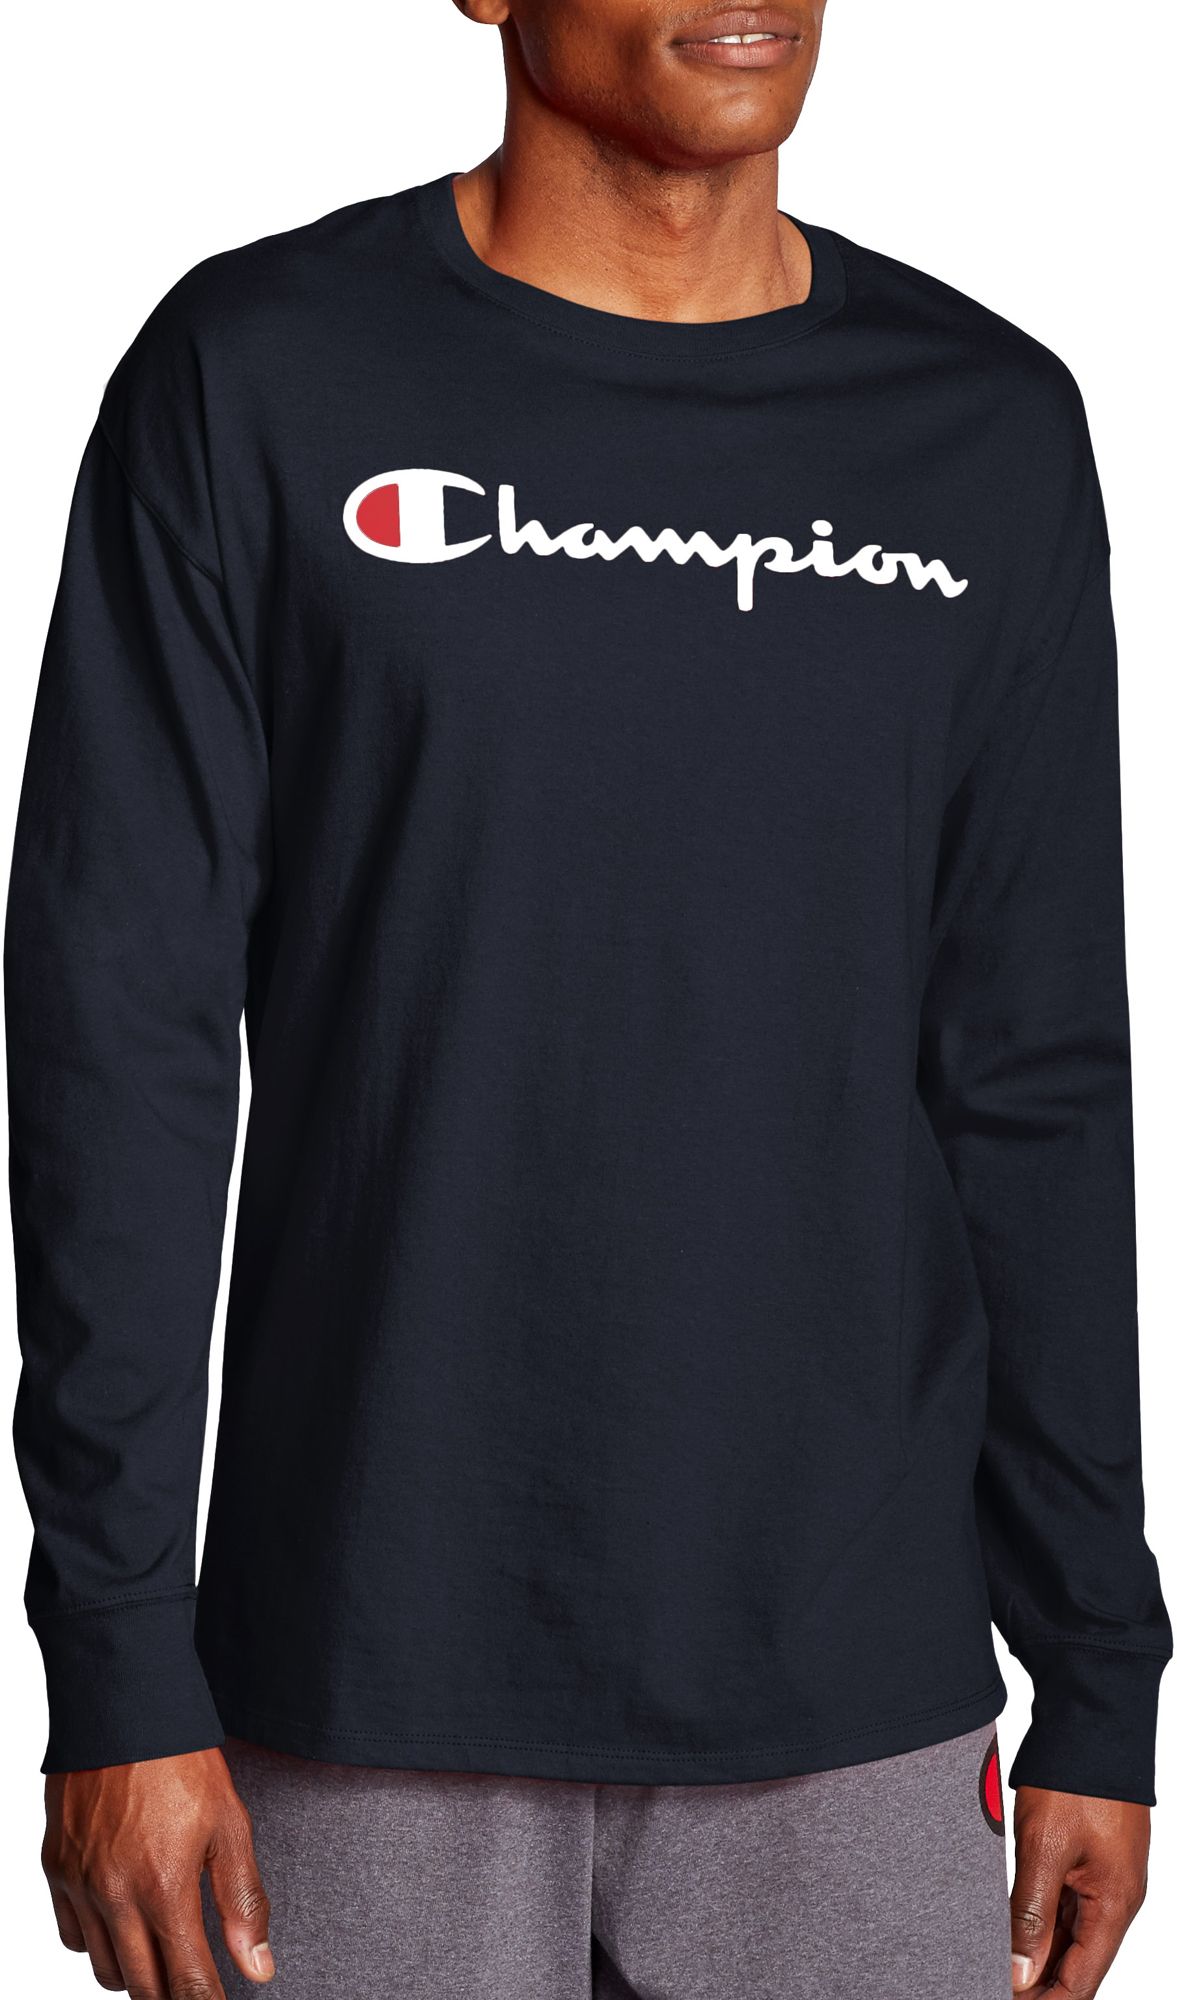 champion long shirt